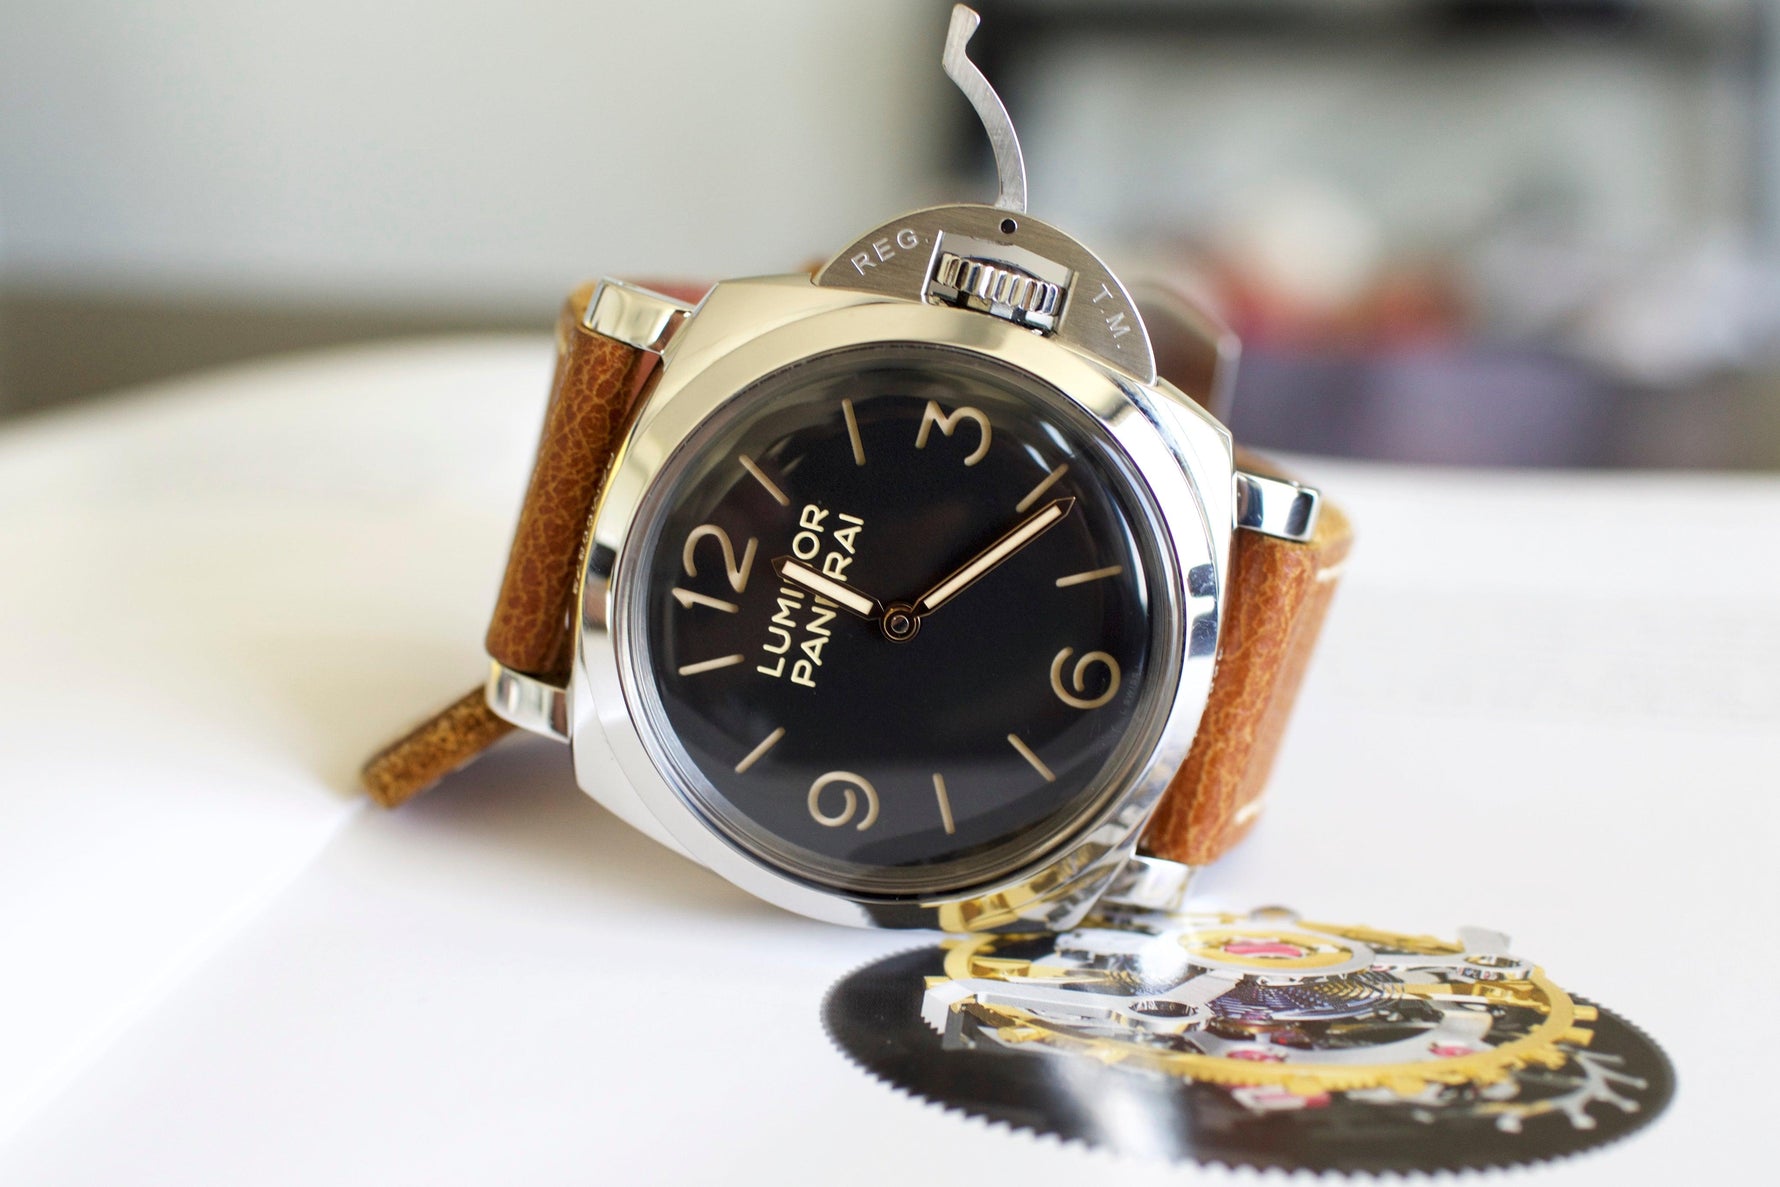 SOLDOUT: Panerai PAM 372 - WearingTime Luxury Watches